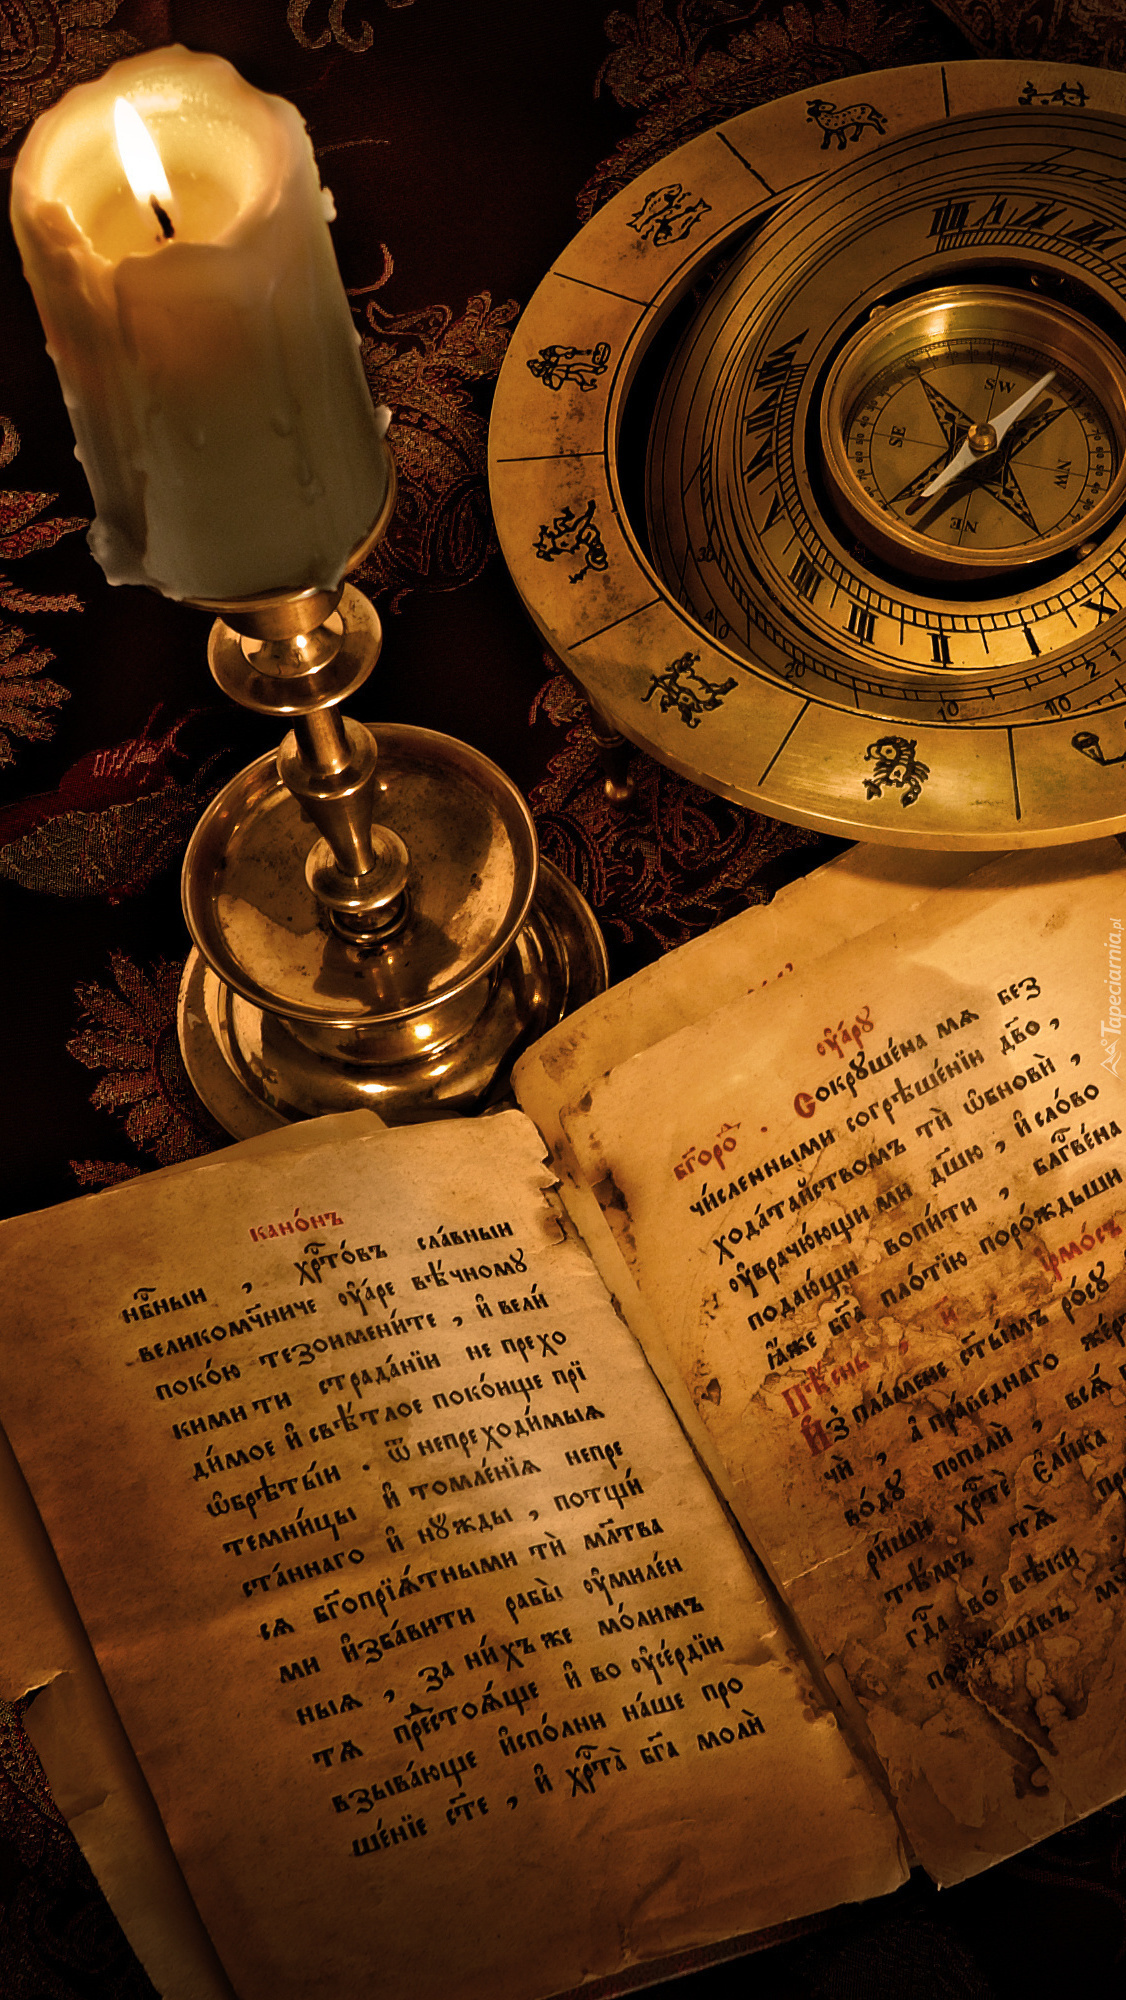 Świeca obok kompasu i starej książki